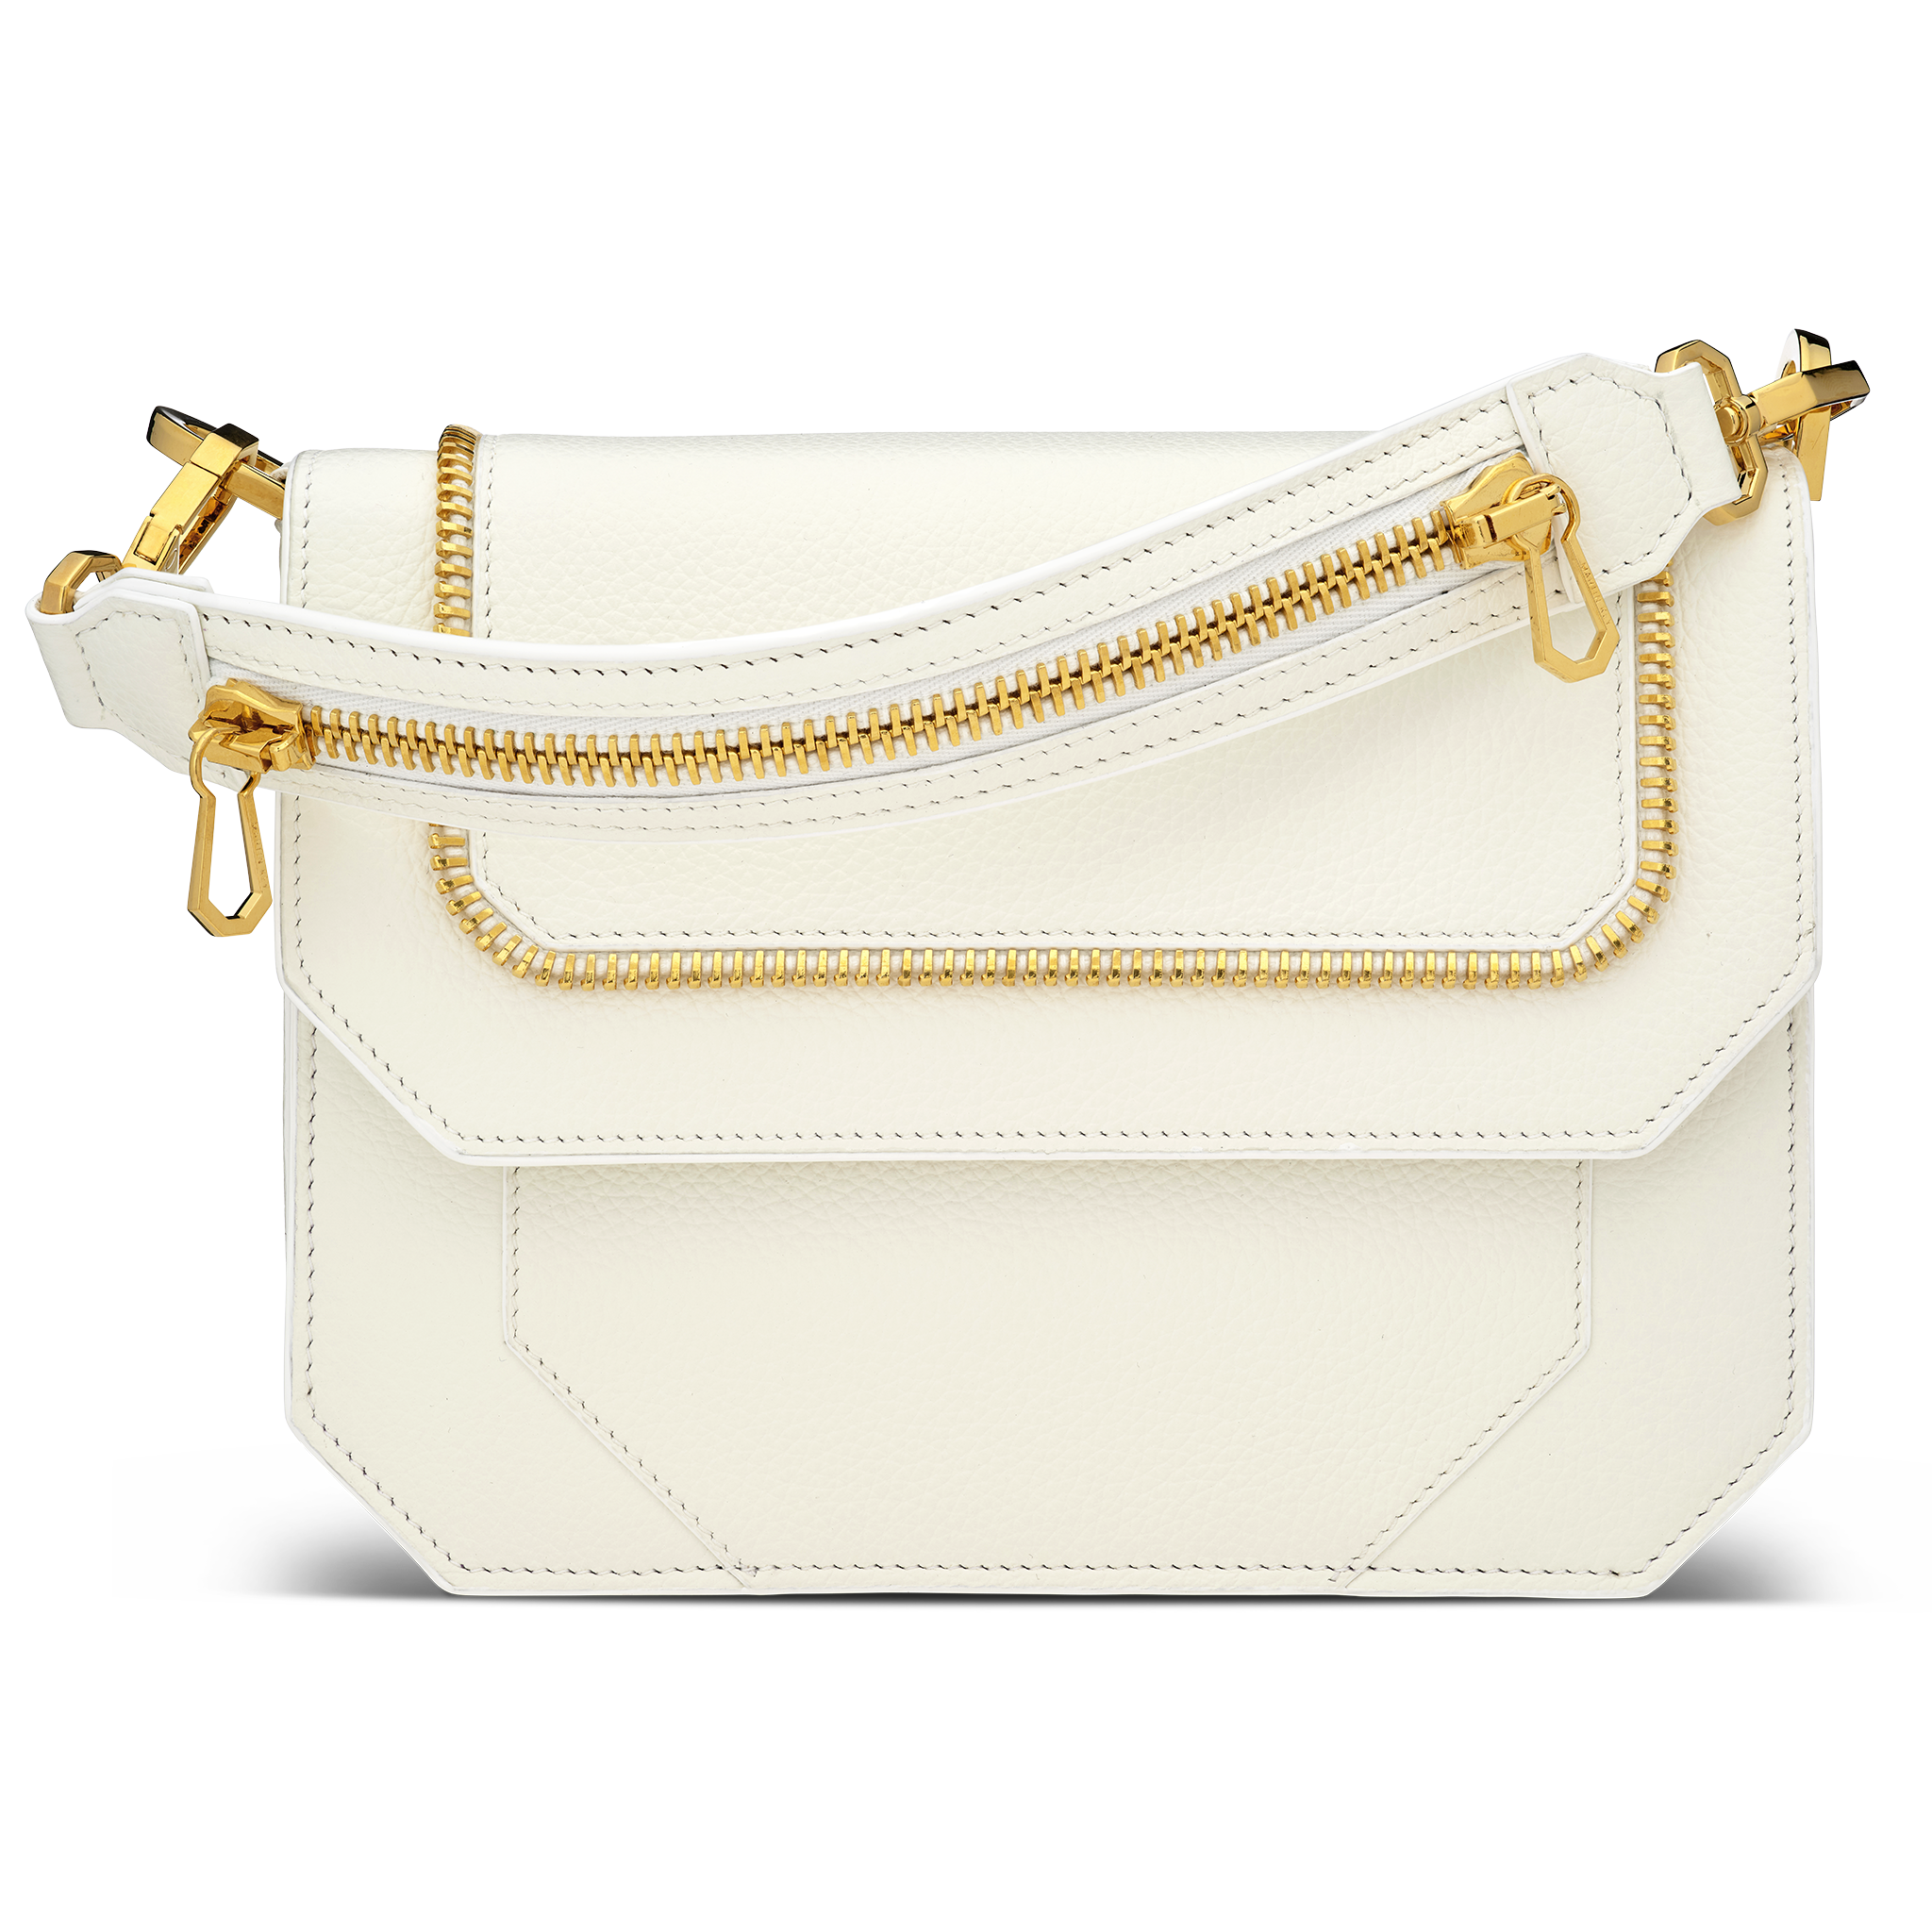 Paris bag white gold